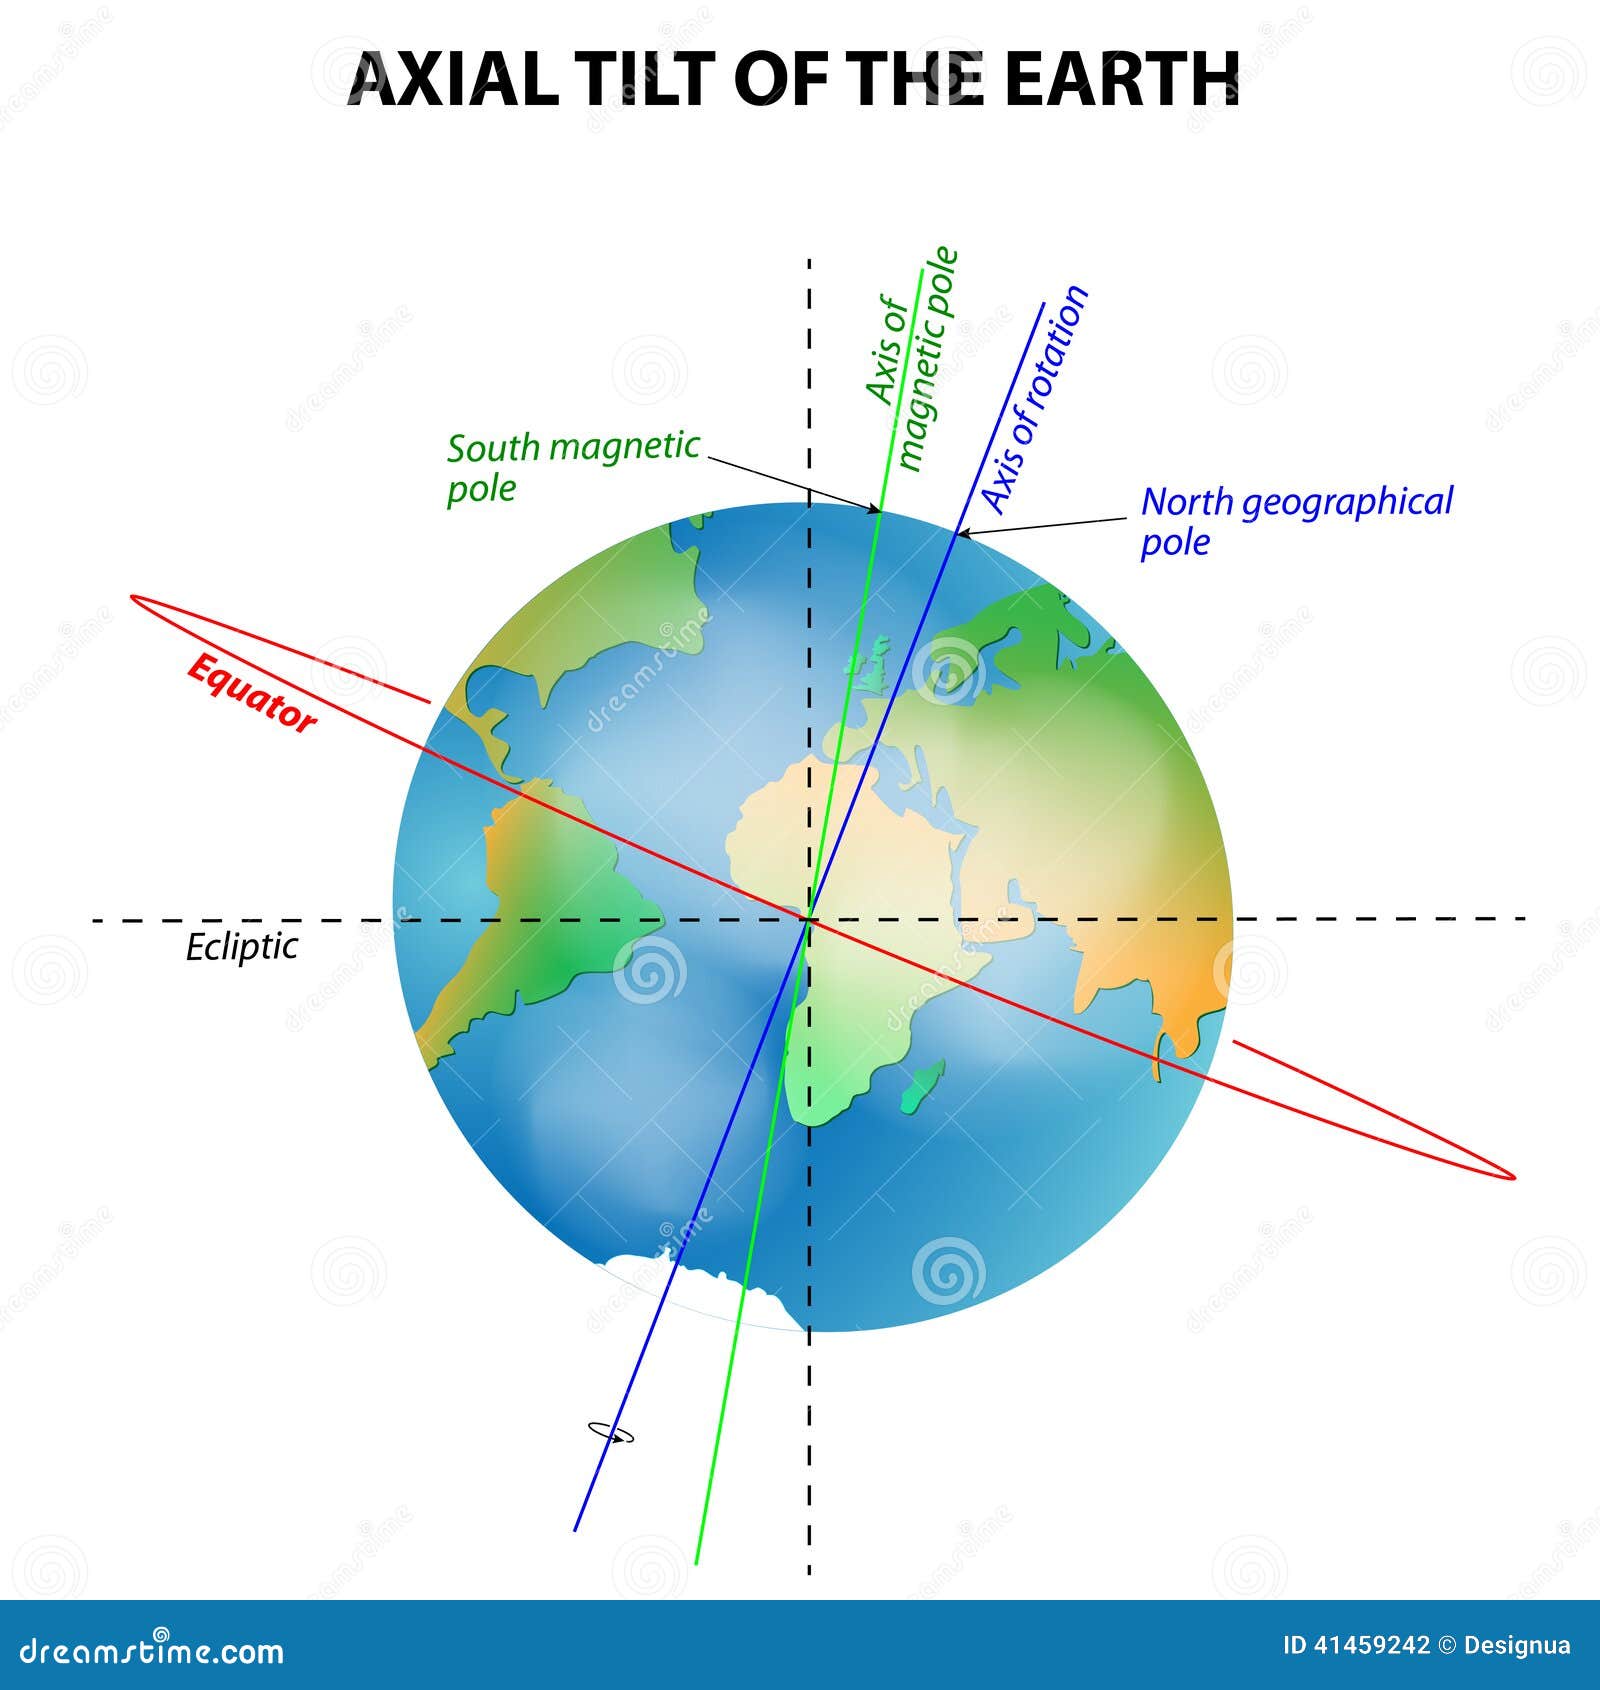 axial tilt of the earth